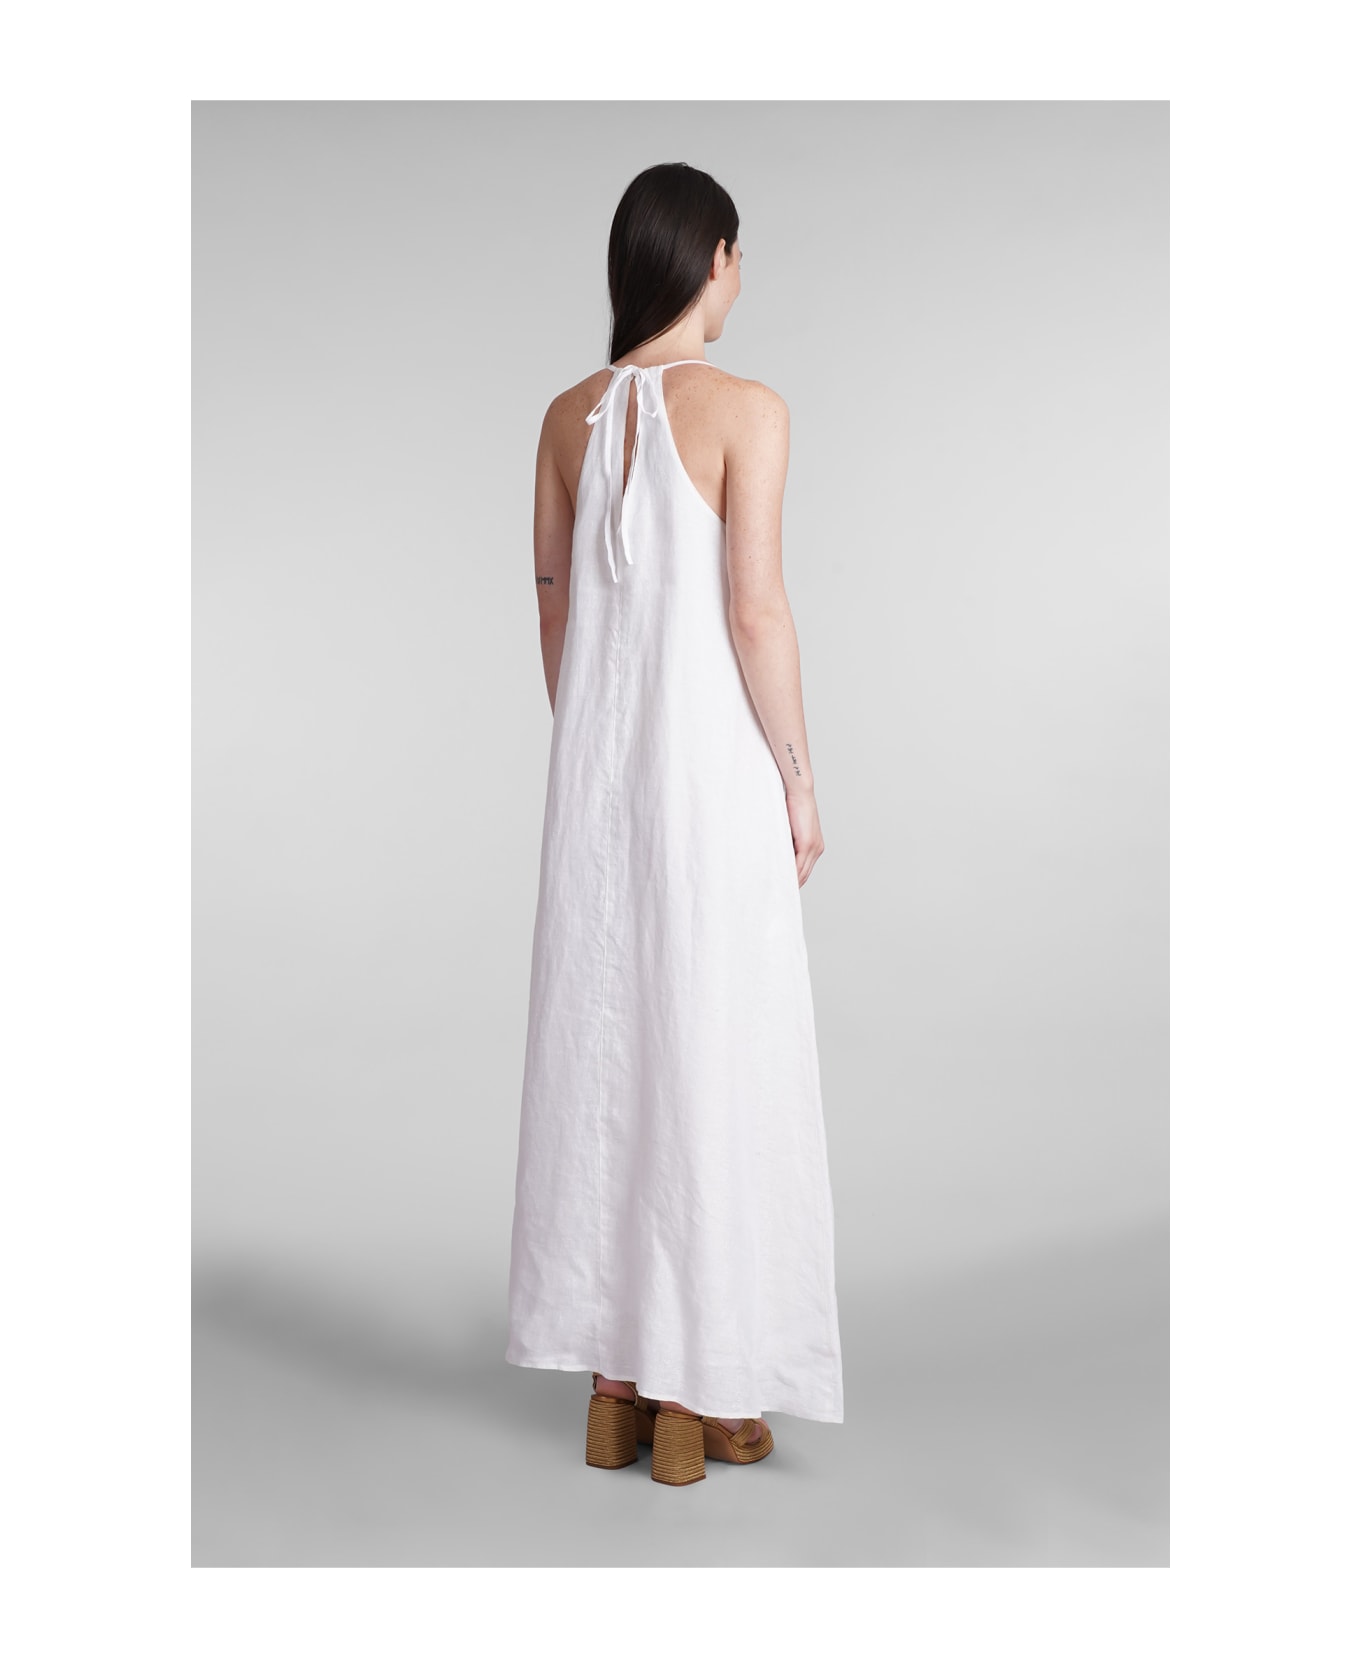 120% Lino Dress In White Cotton - white